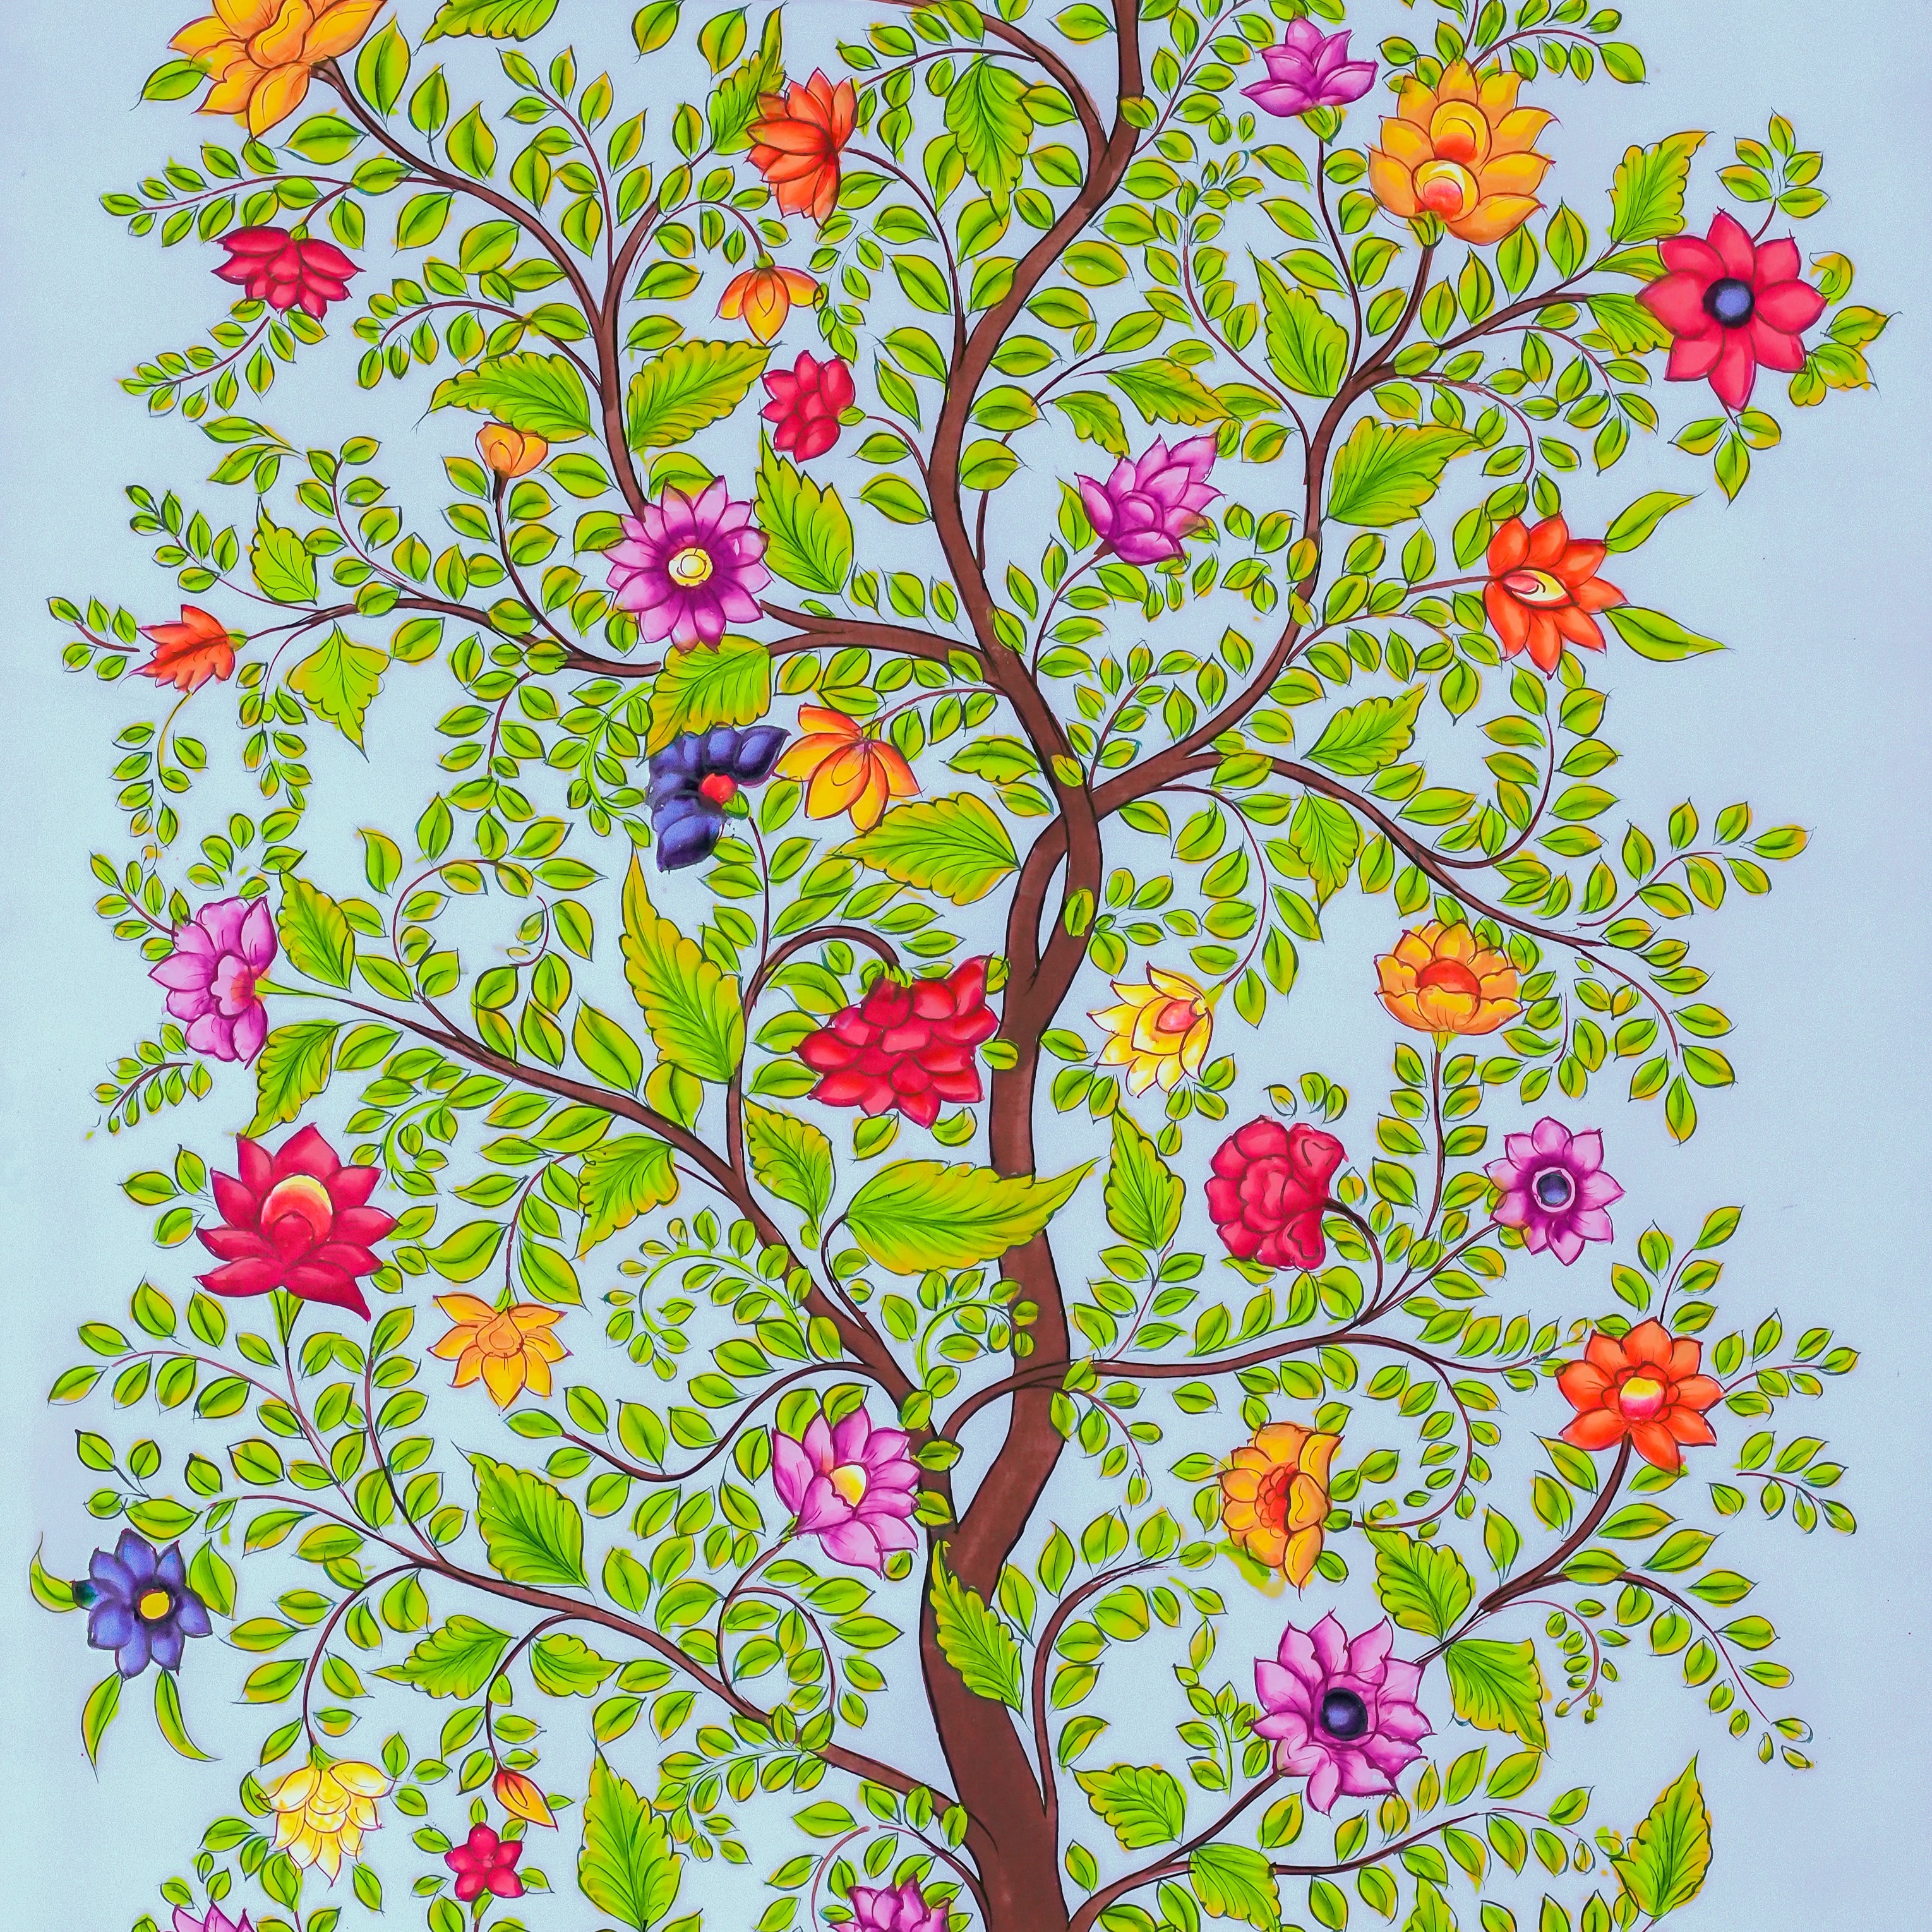 Tree of Hope Kalamkari Artwork Painting For Home Wall Decor